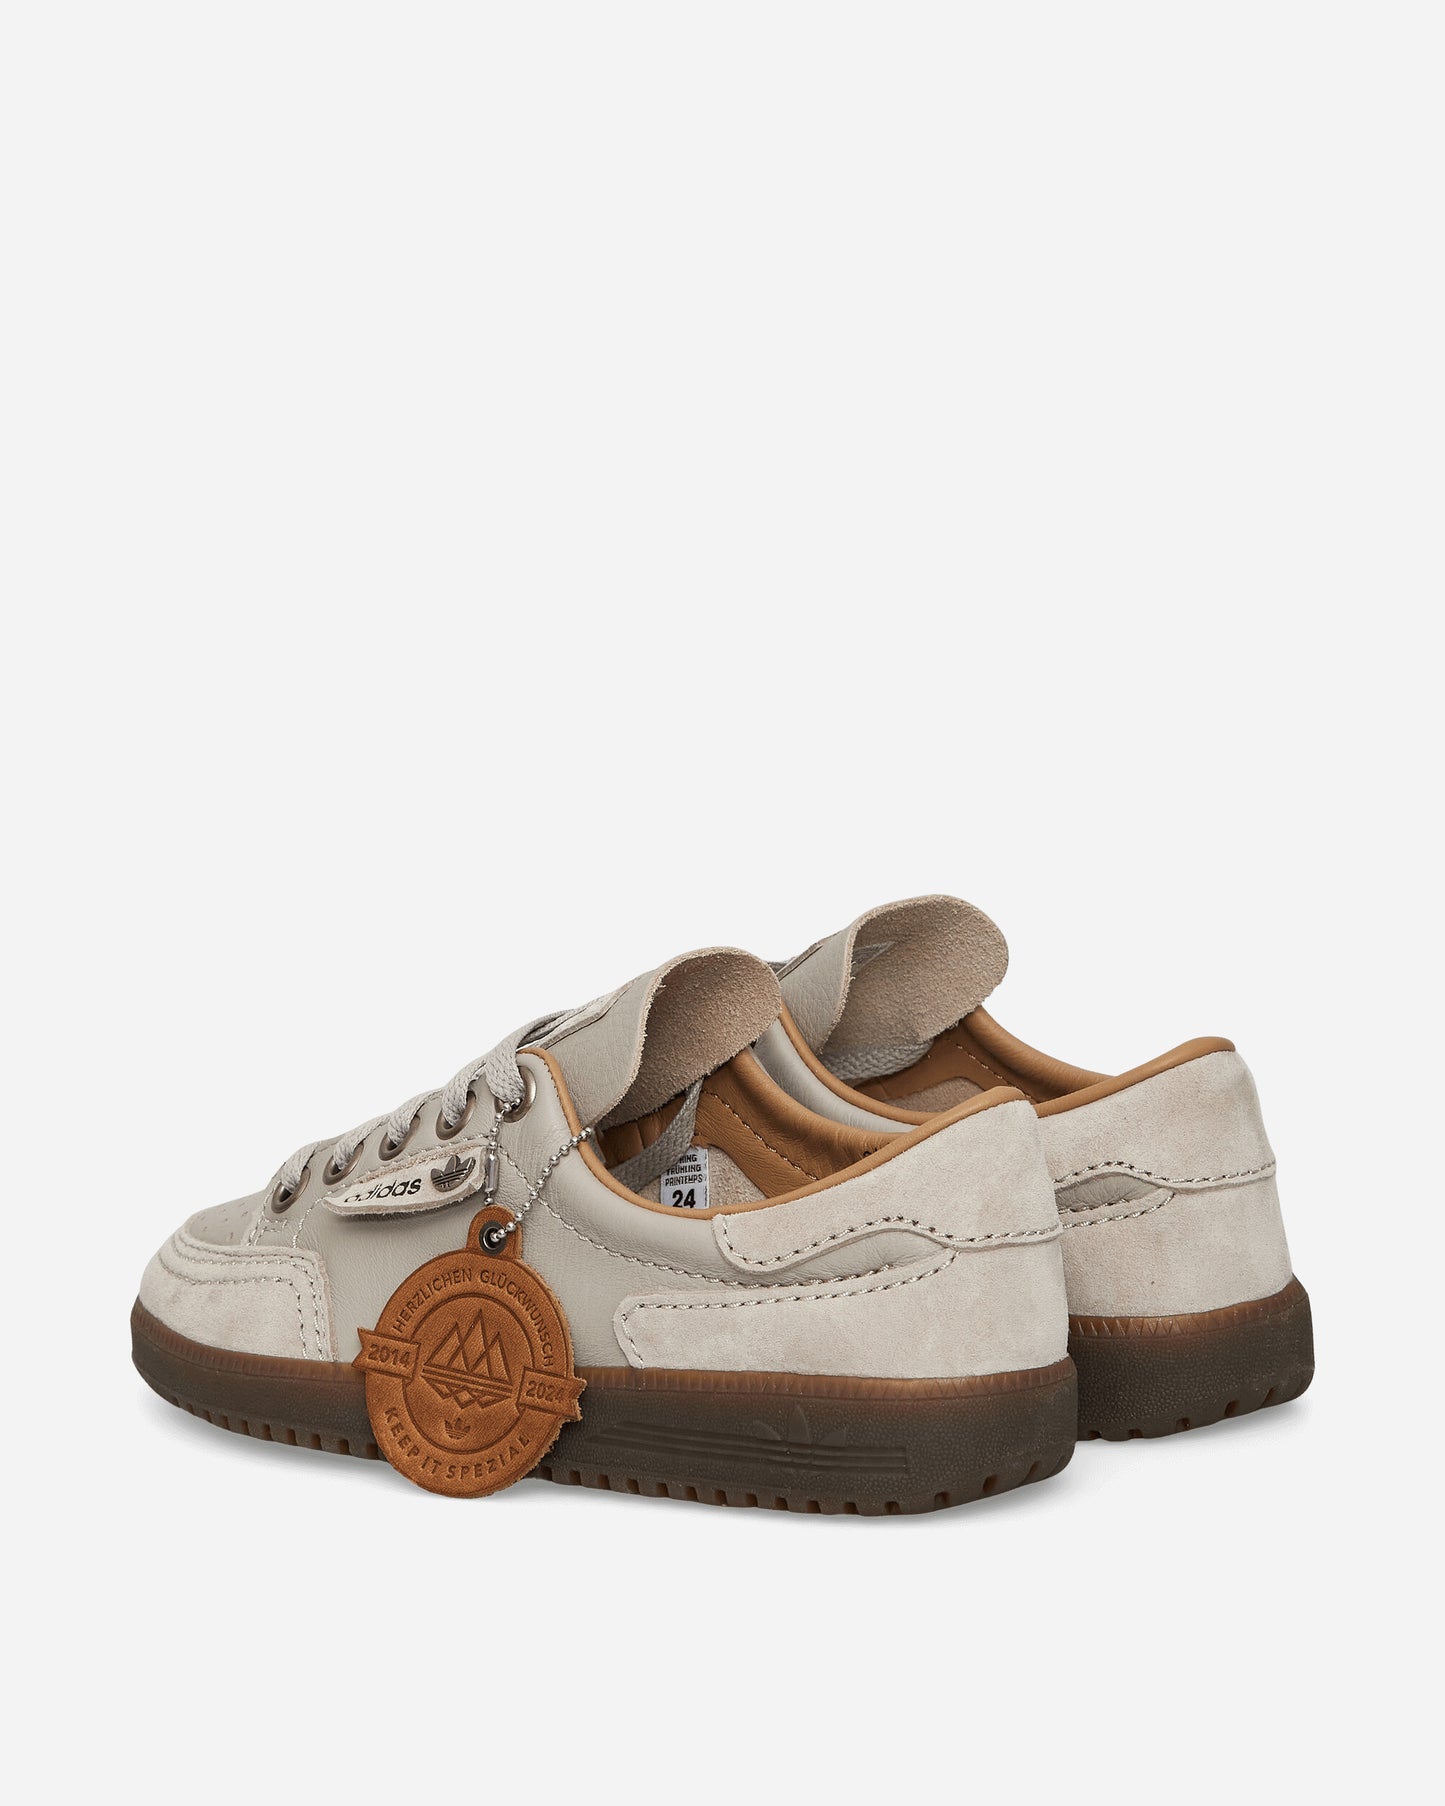 adidas Garwen Spzl Light Brown/Cardboard Sneakers High IG6563